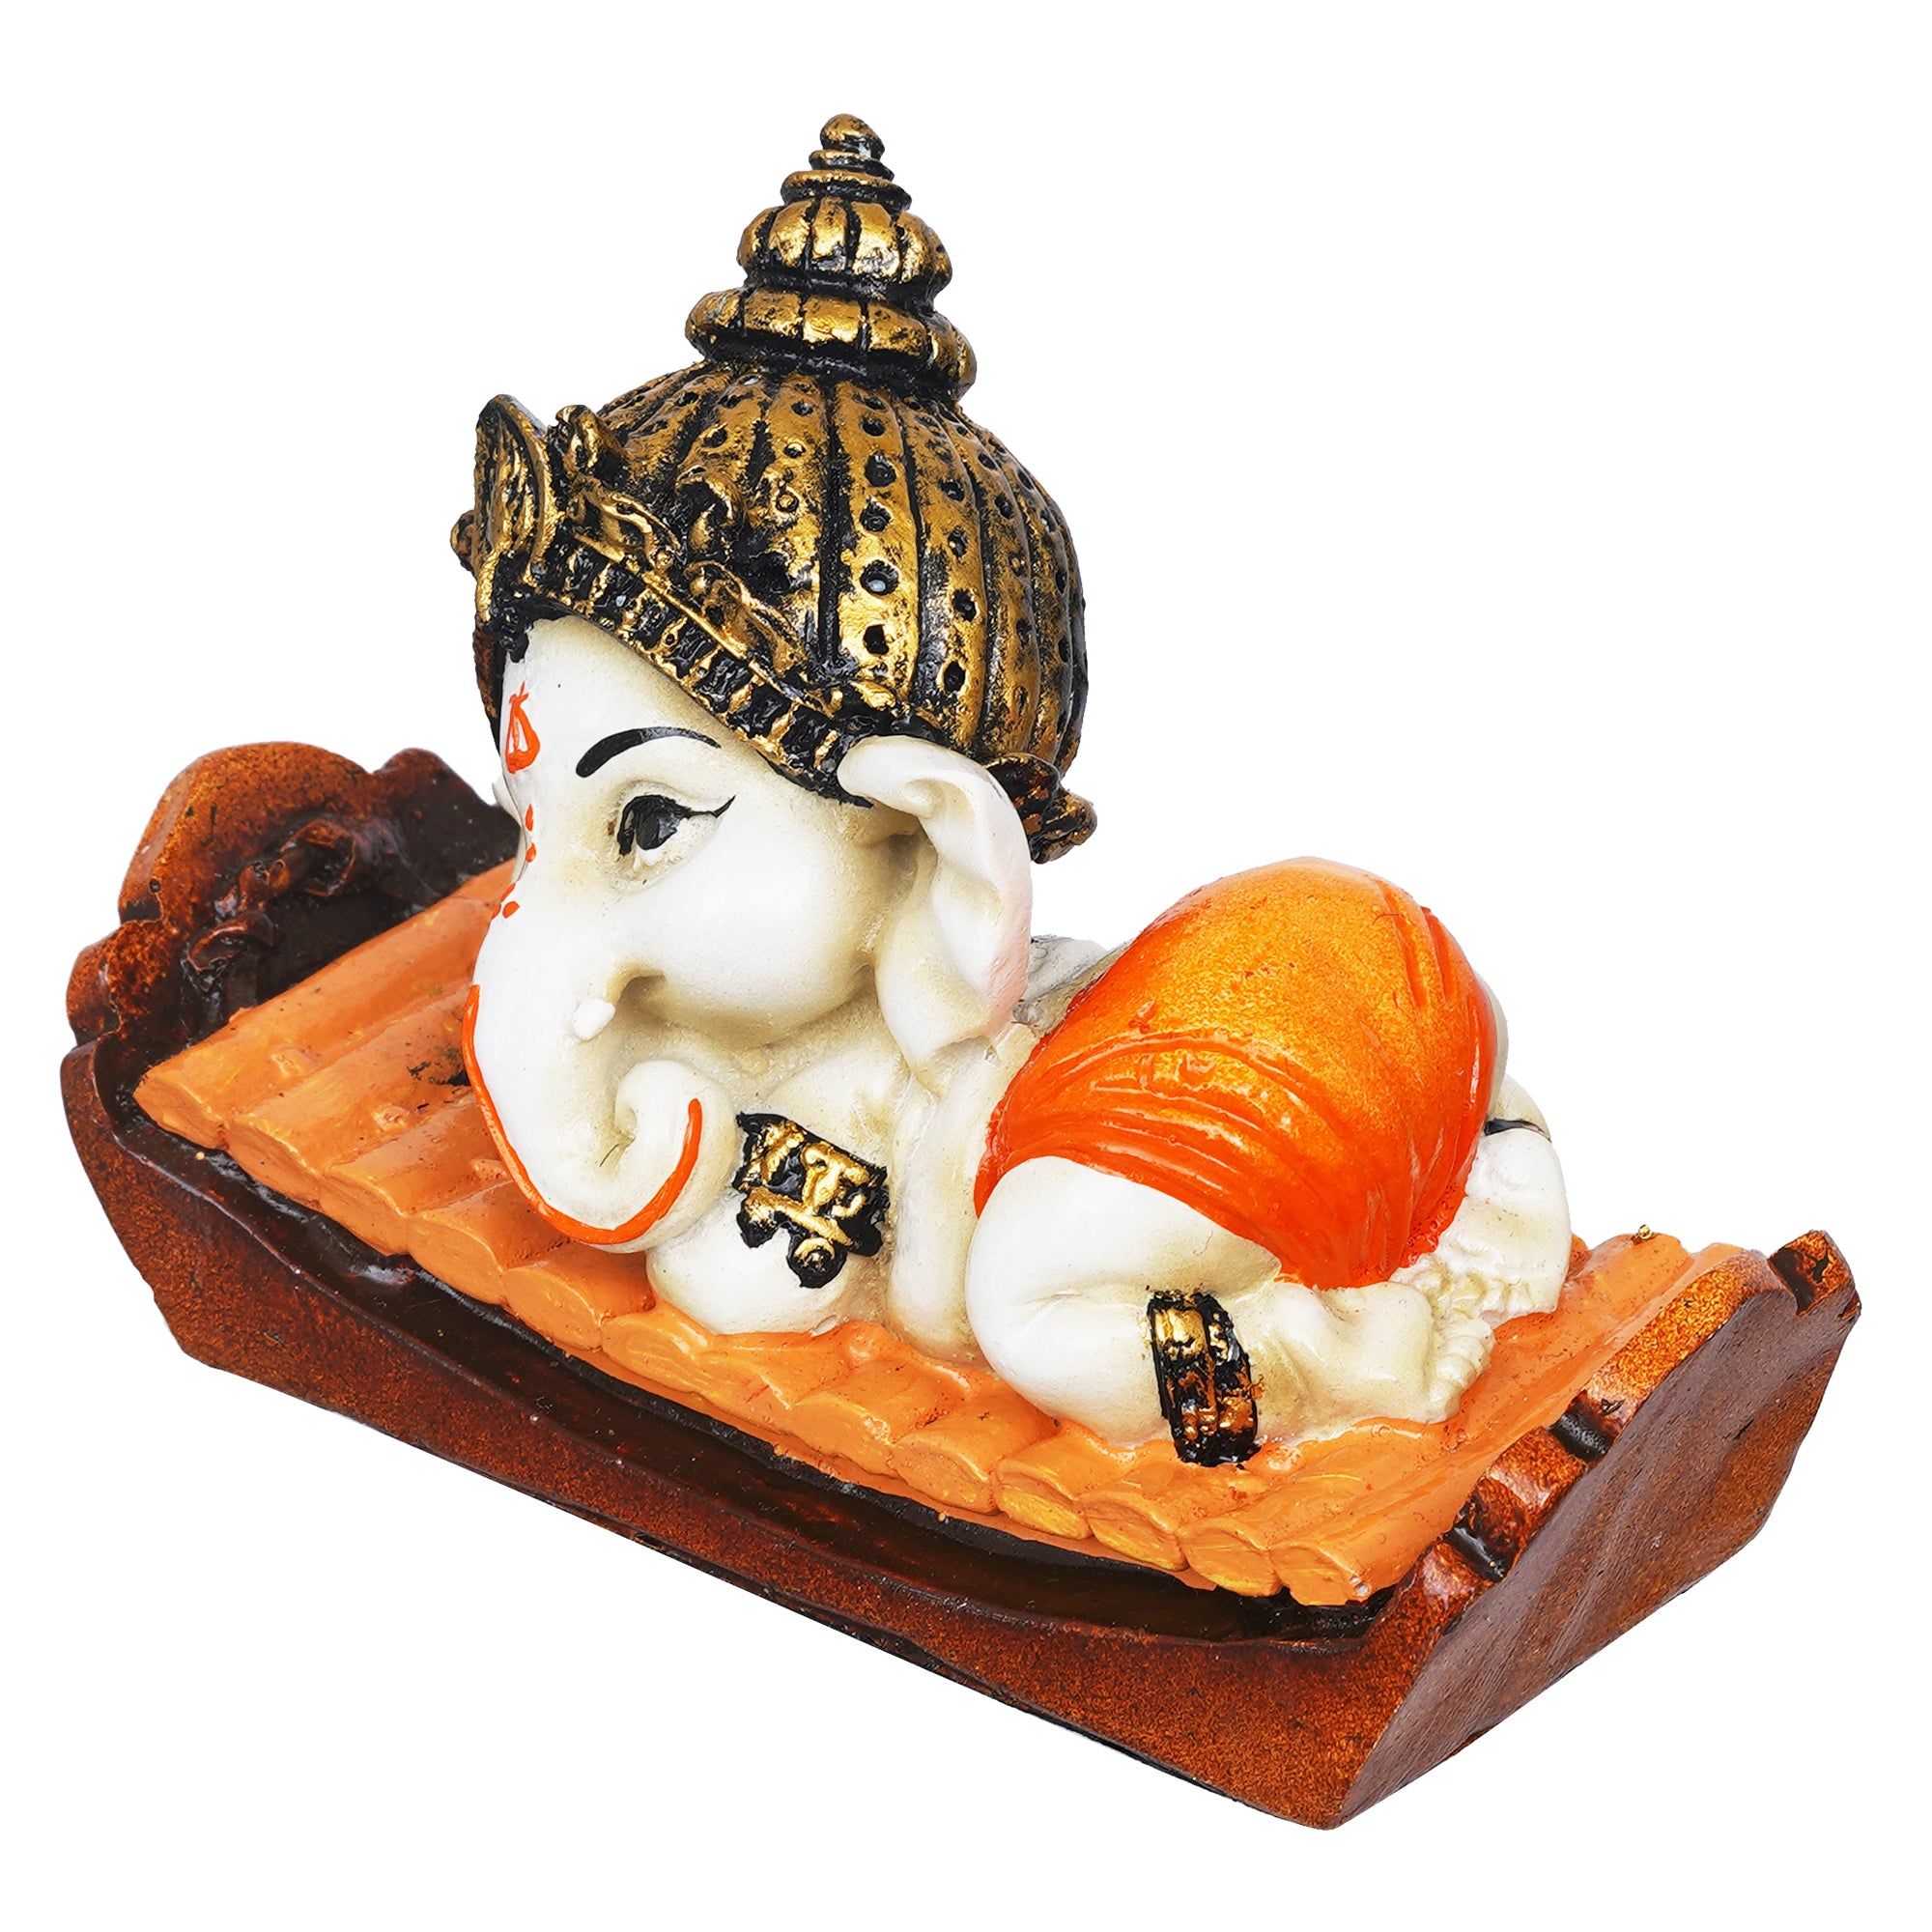 eCraftIndia Orange Handcrafted Polyresin Decorated Lord Ganesha Idol Sitting on Musical Instrument 7